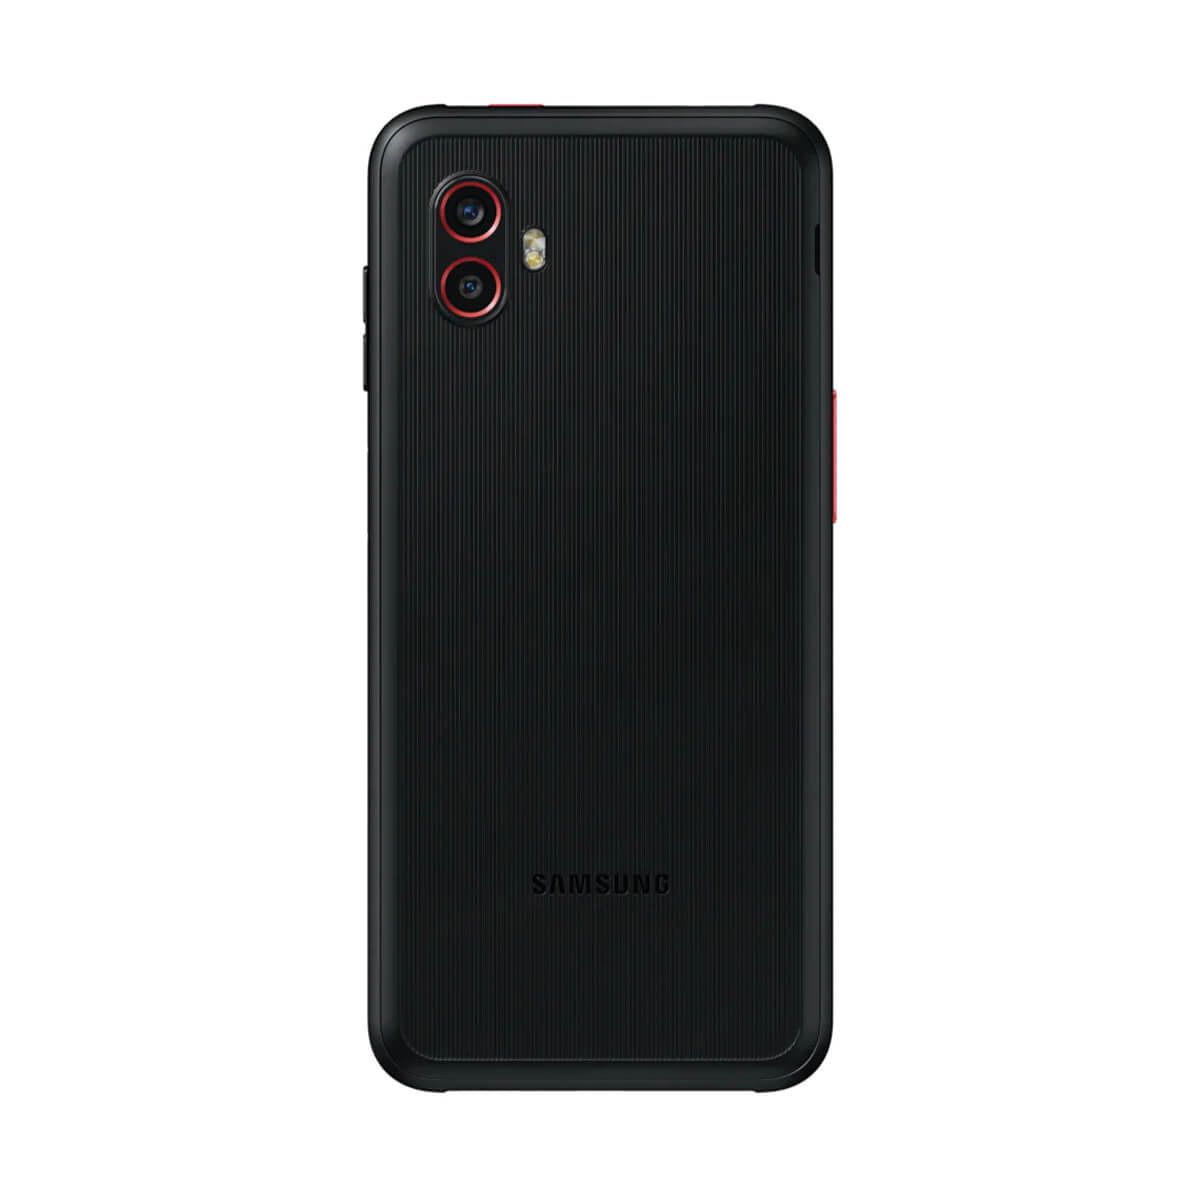 Samsung Galaxy XCover6 Pro 6GB/128GB Black (Black) Enterprise Edition Dual SIM SM-G736